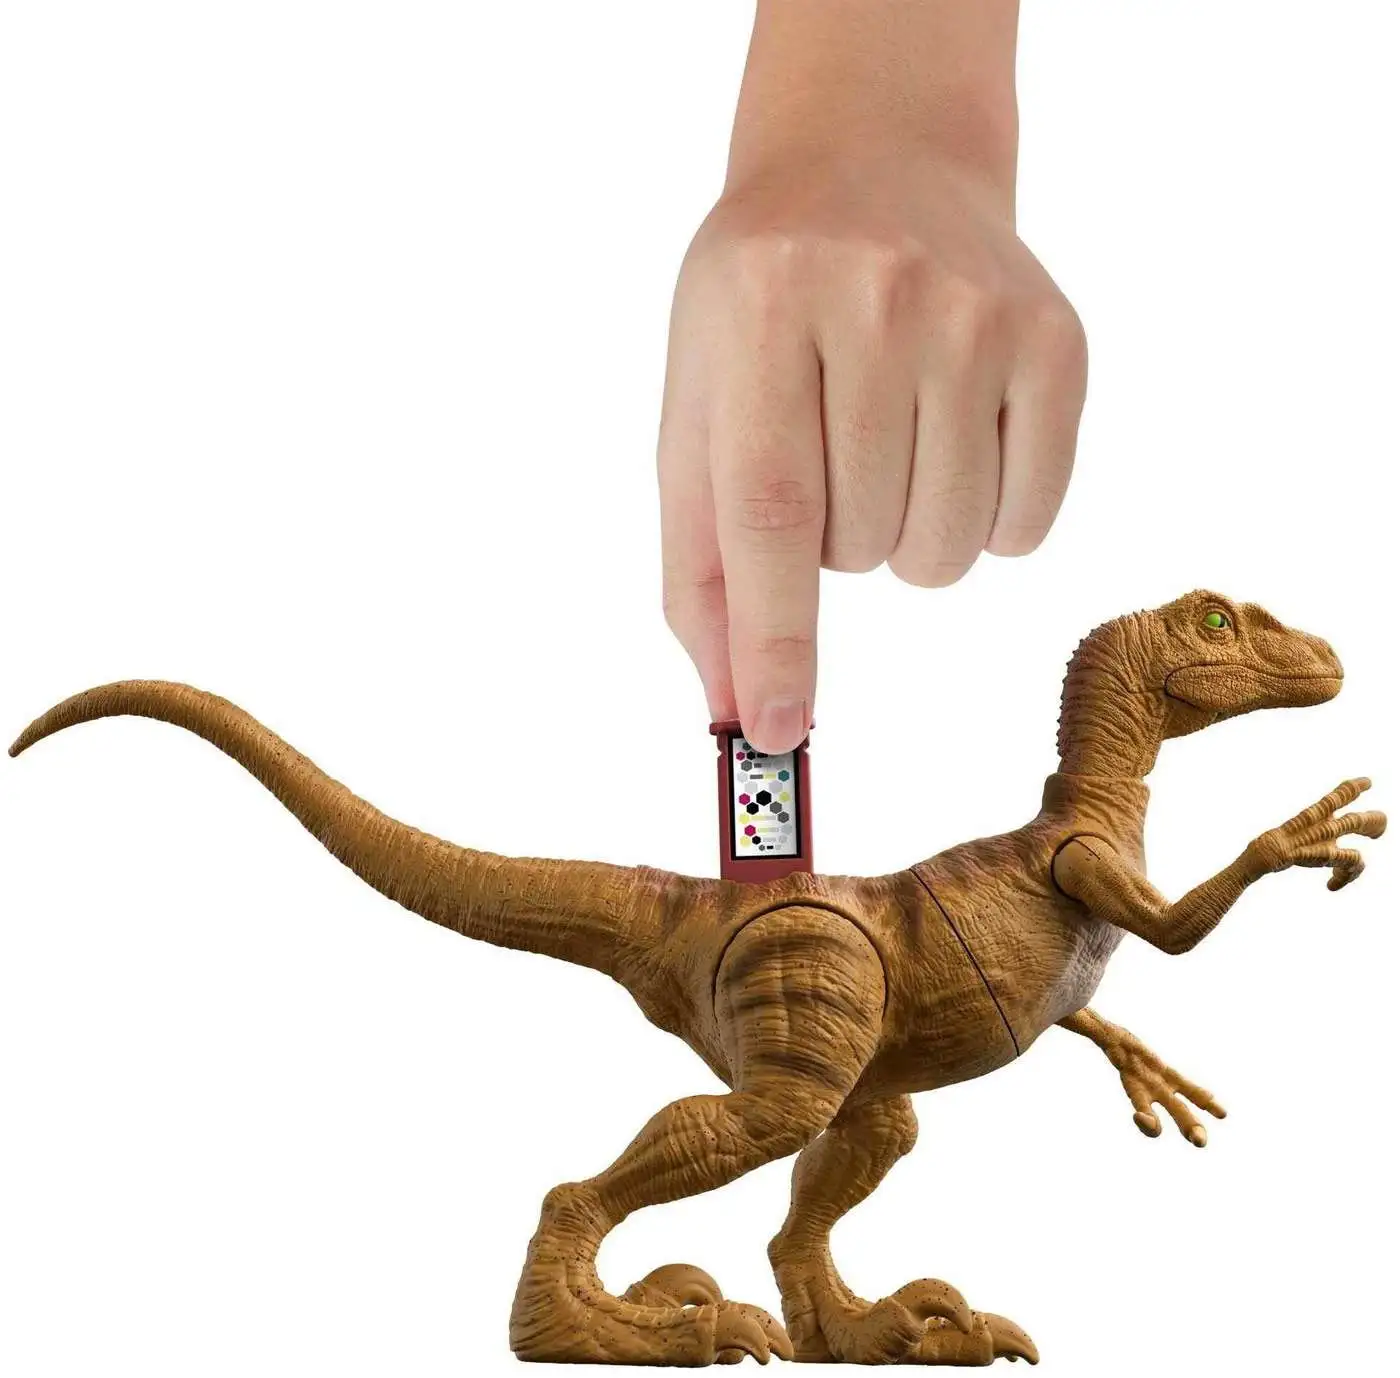 Jurassic World Legacy Collection Velociraptor Action Figure Orange